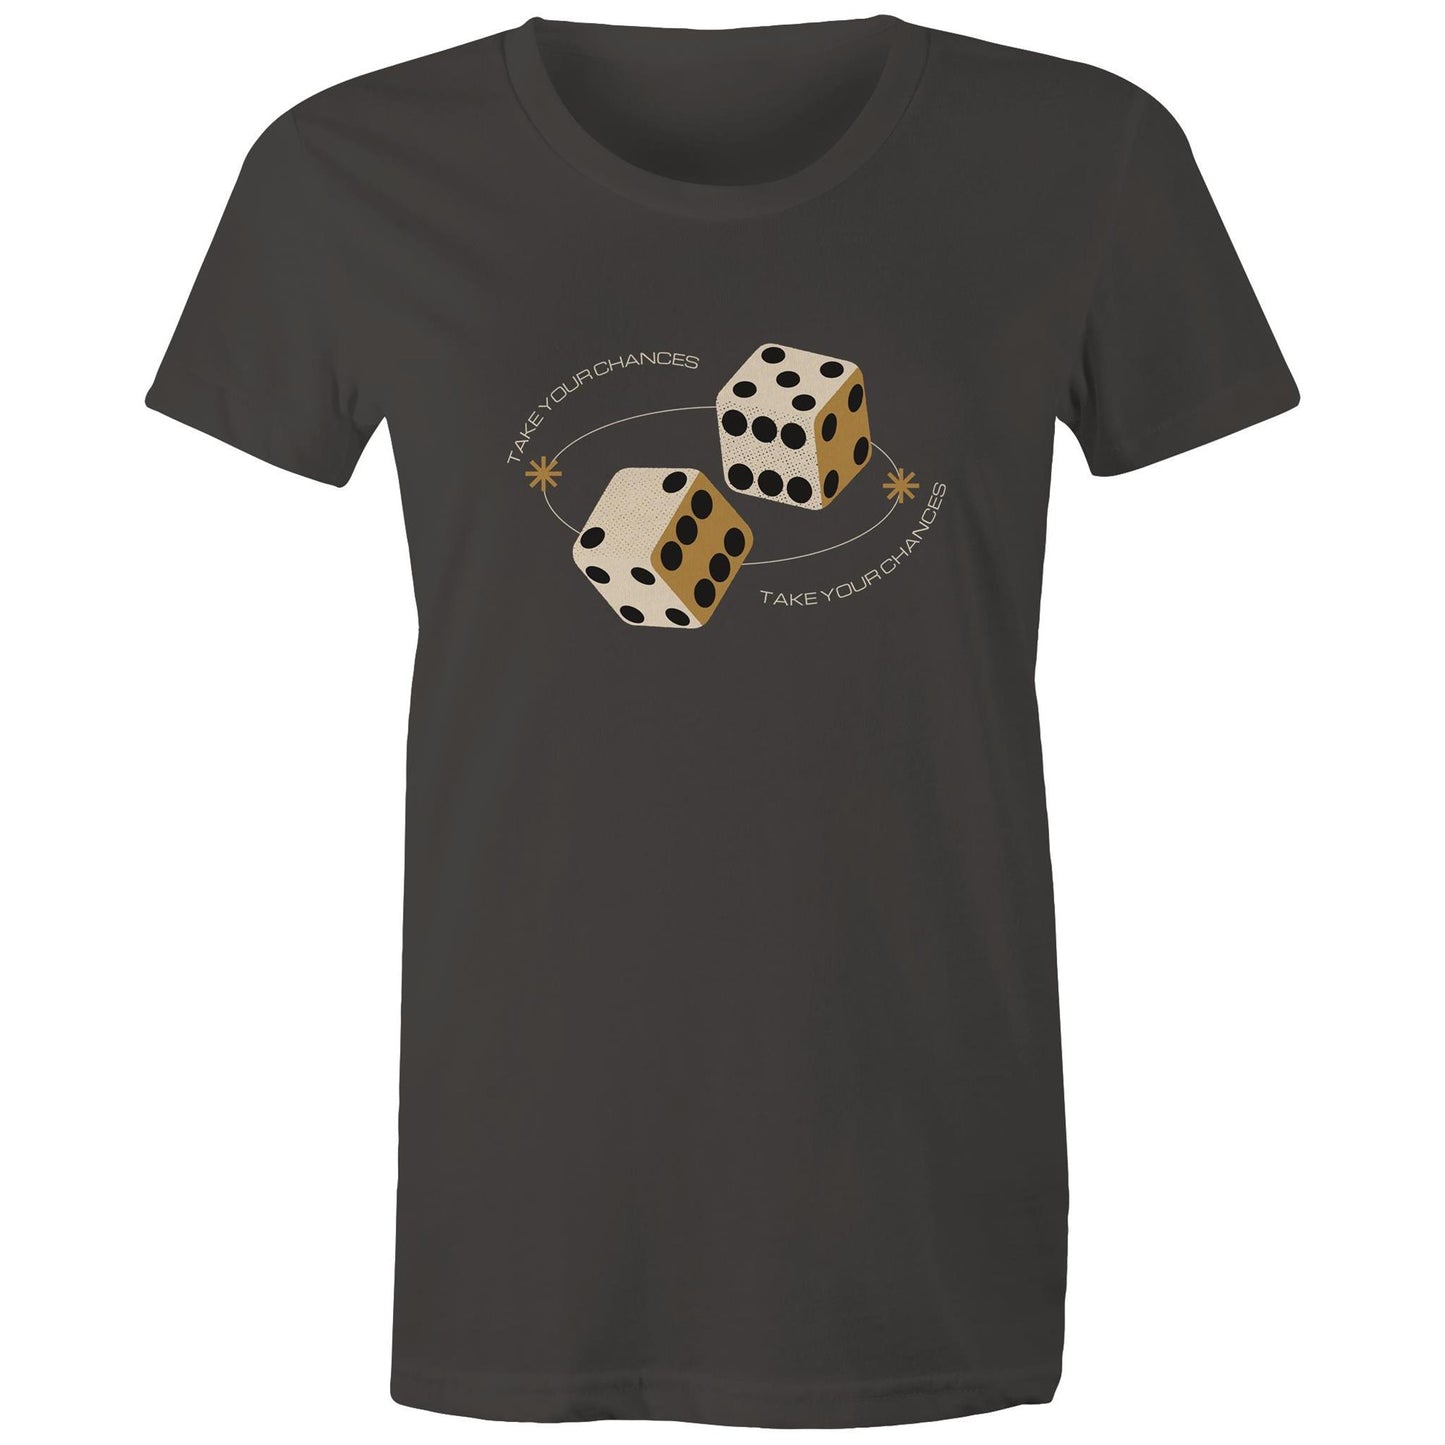 Dice, Take Your Chances - Womens T-shirt Charcoal Womens T-shirt Games